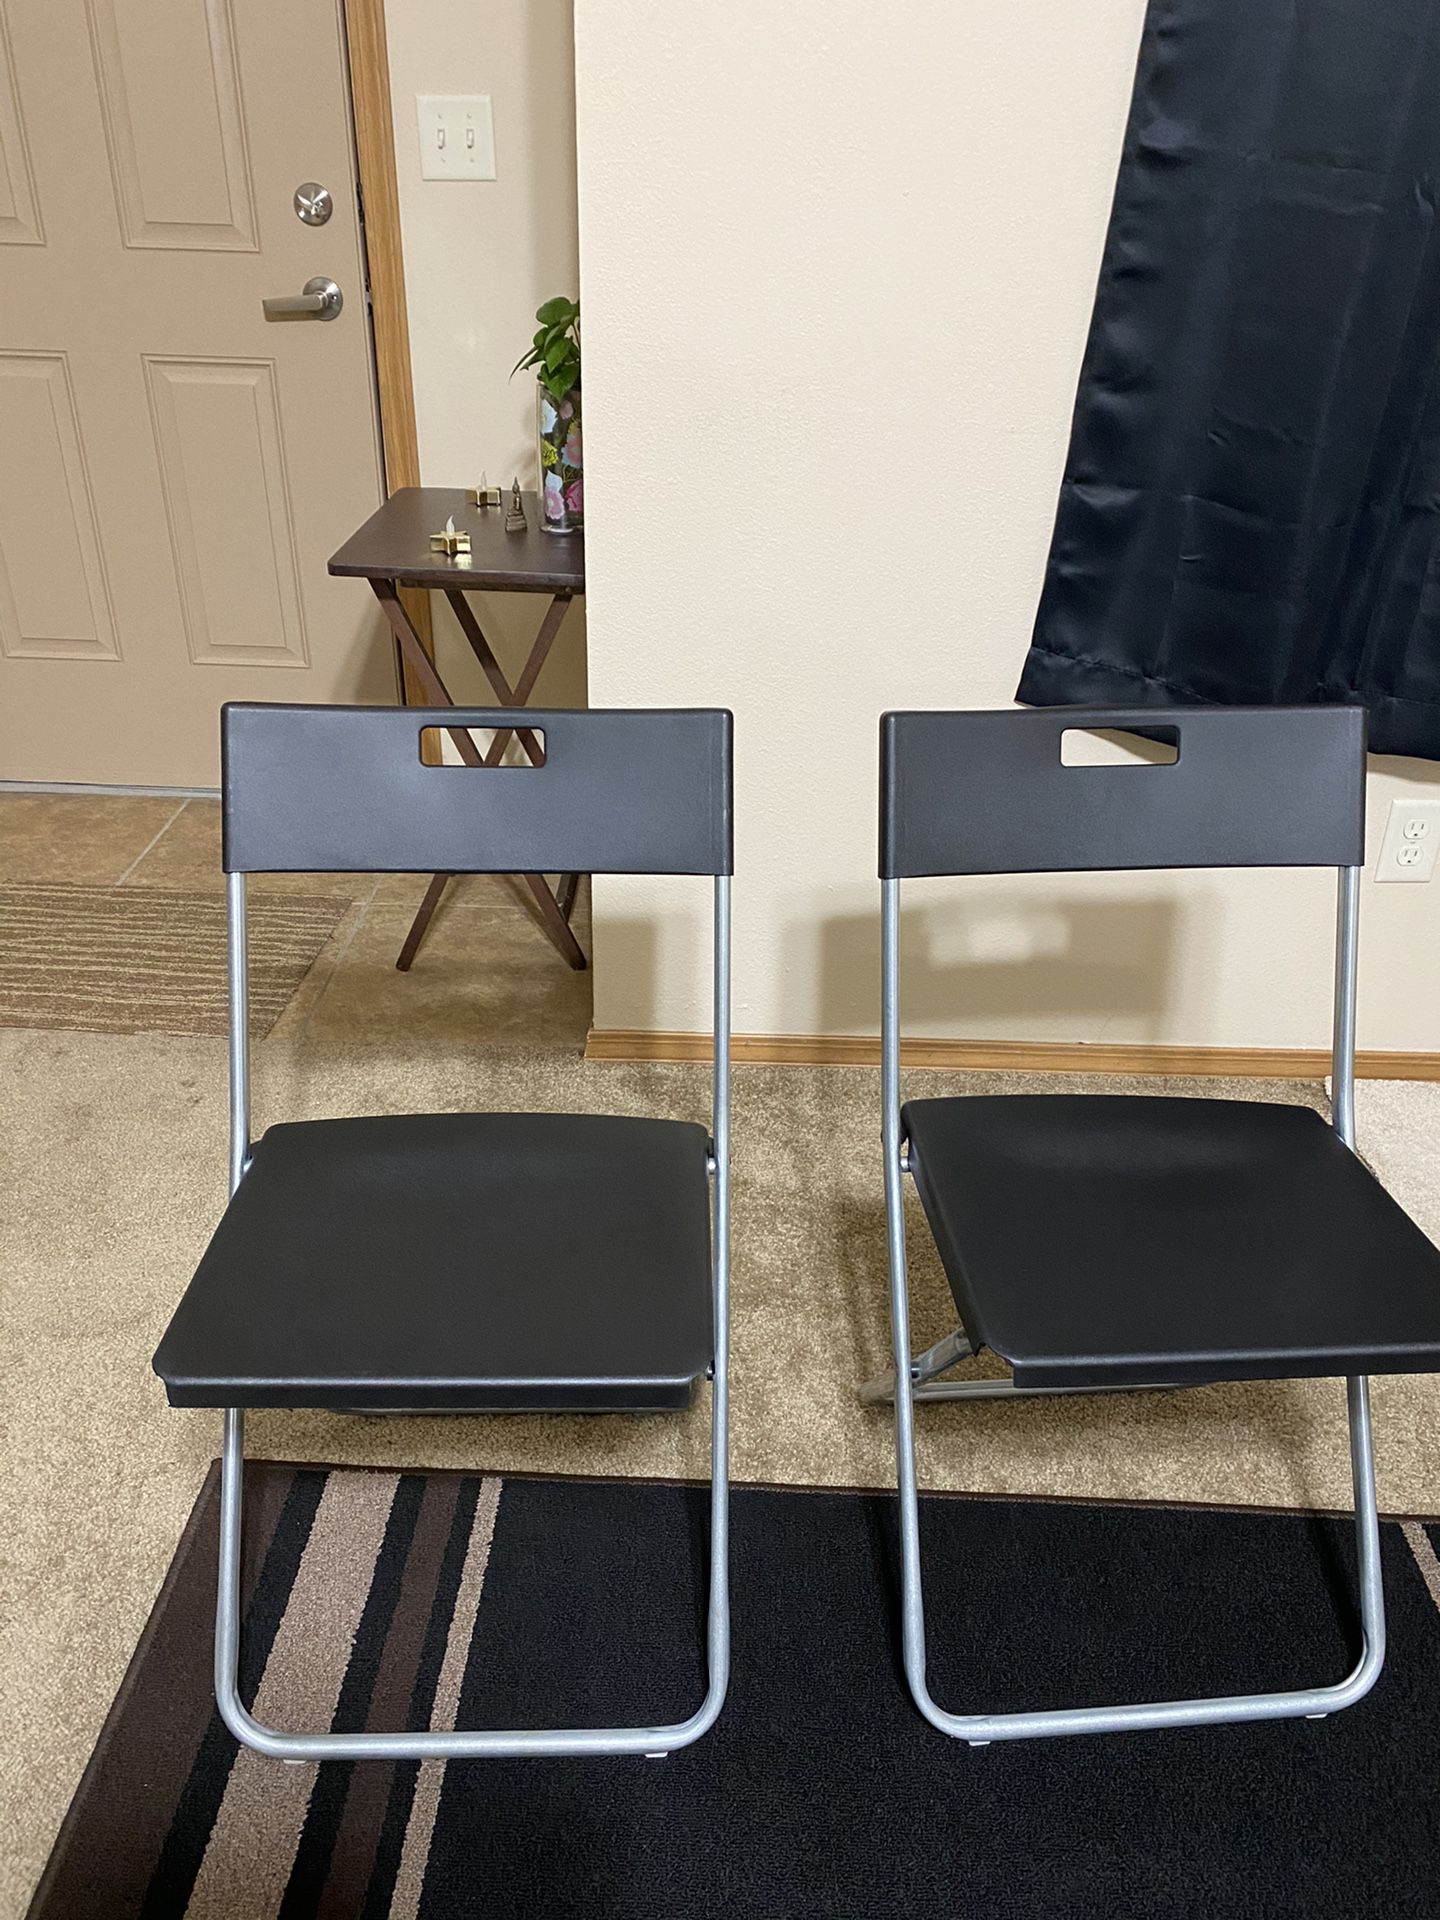 Ikea foldable chairs